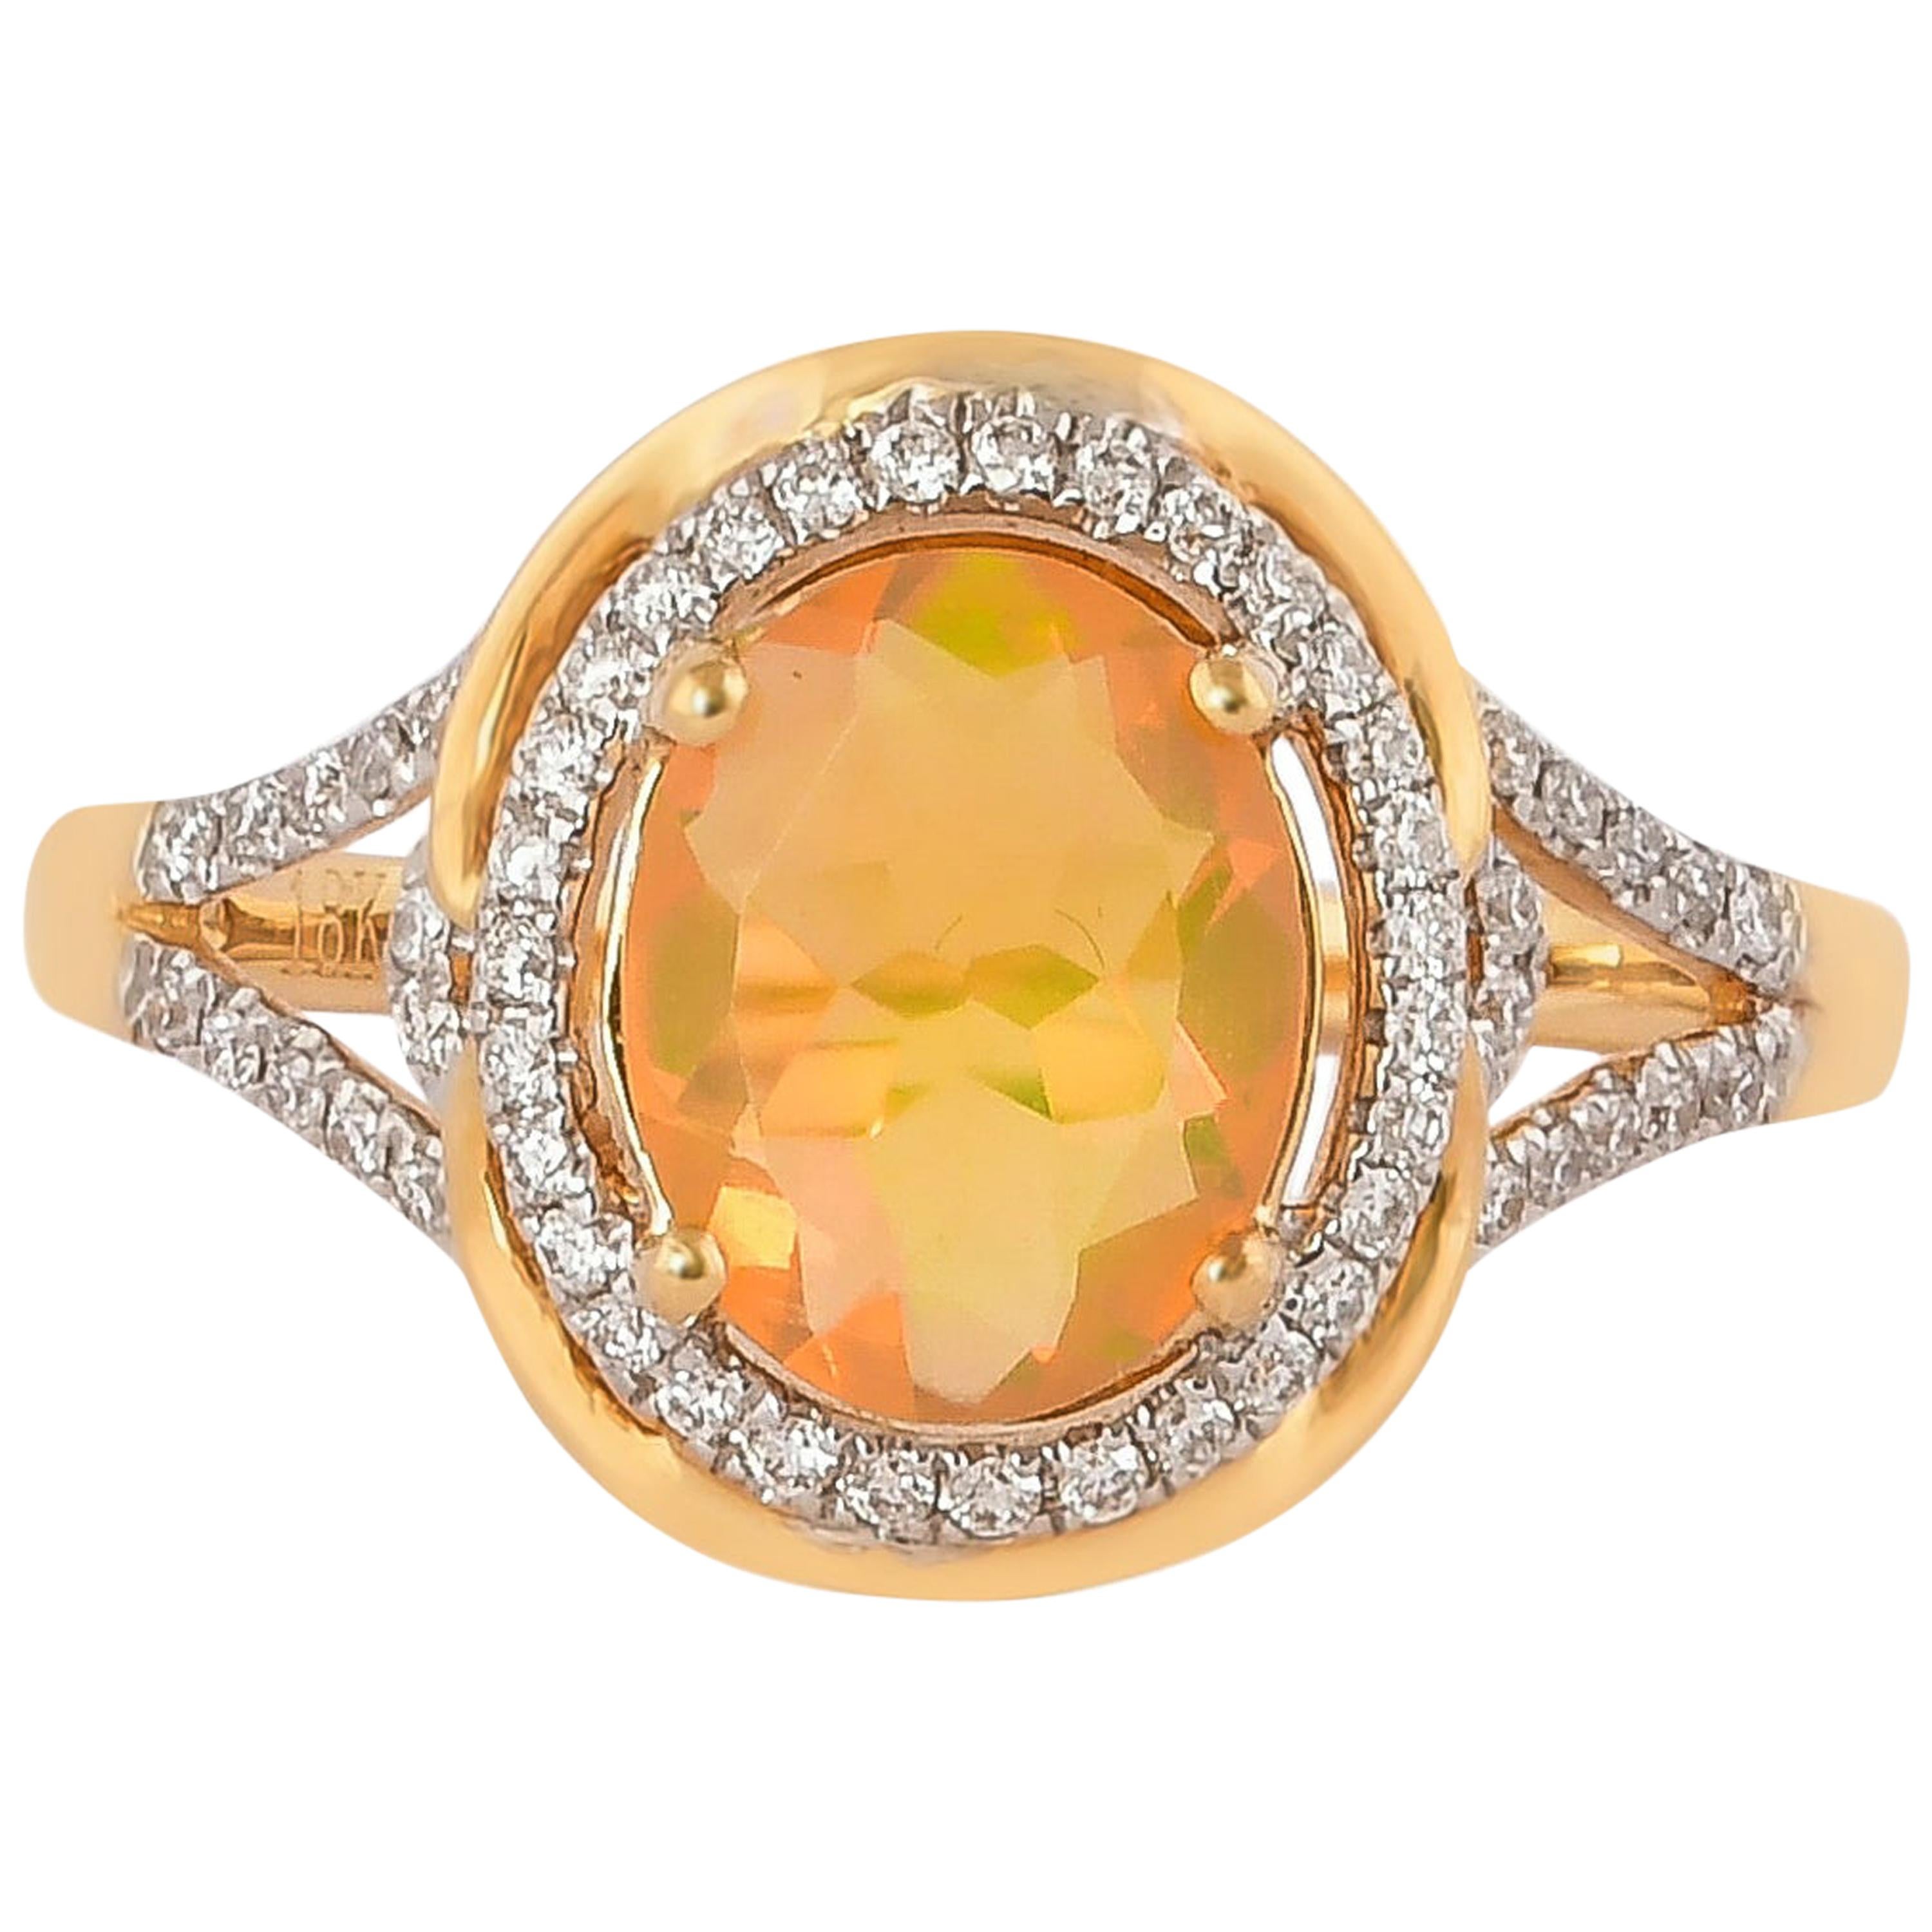 0.9 Carat Ethiopian Opal with Diamond Ring in 18 Karat Yellow Gold